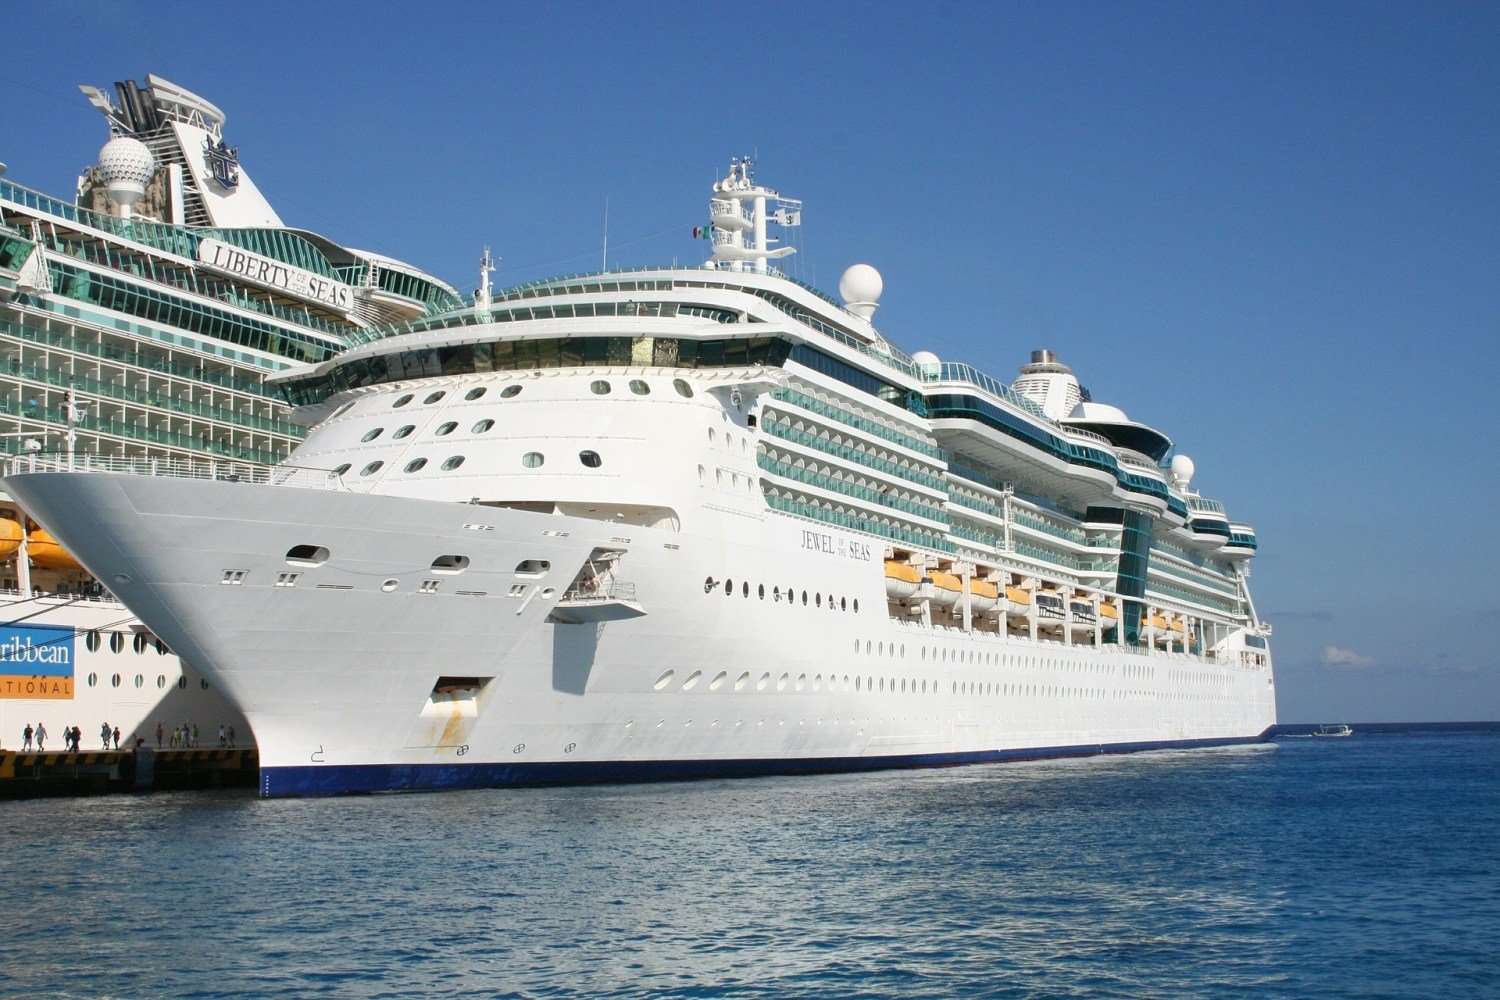 [Royal] Bermuda Cruise 7 nights and 8 days â Top Travel